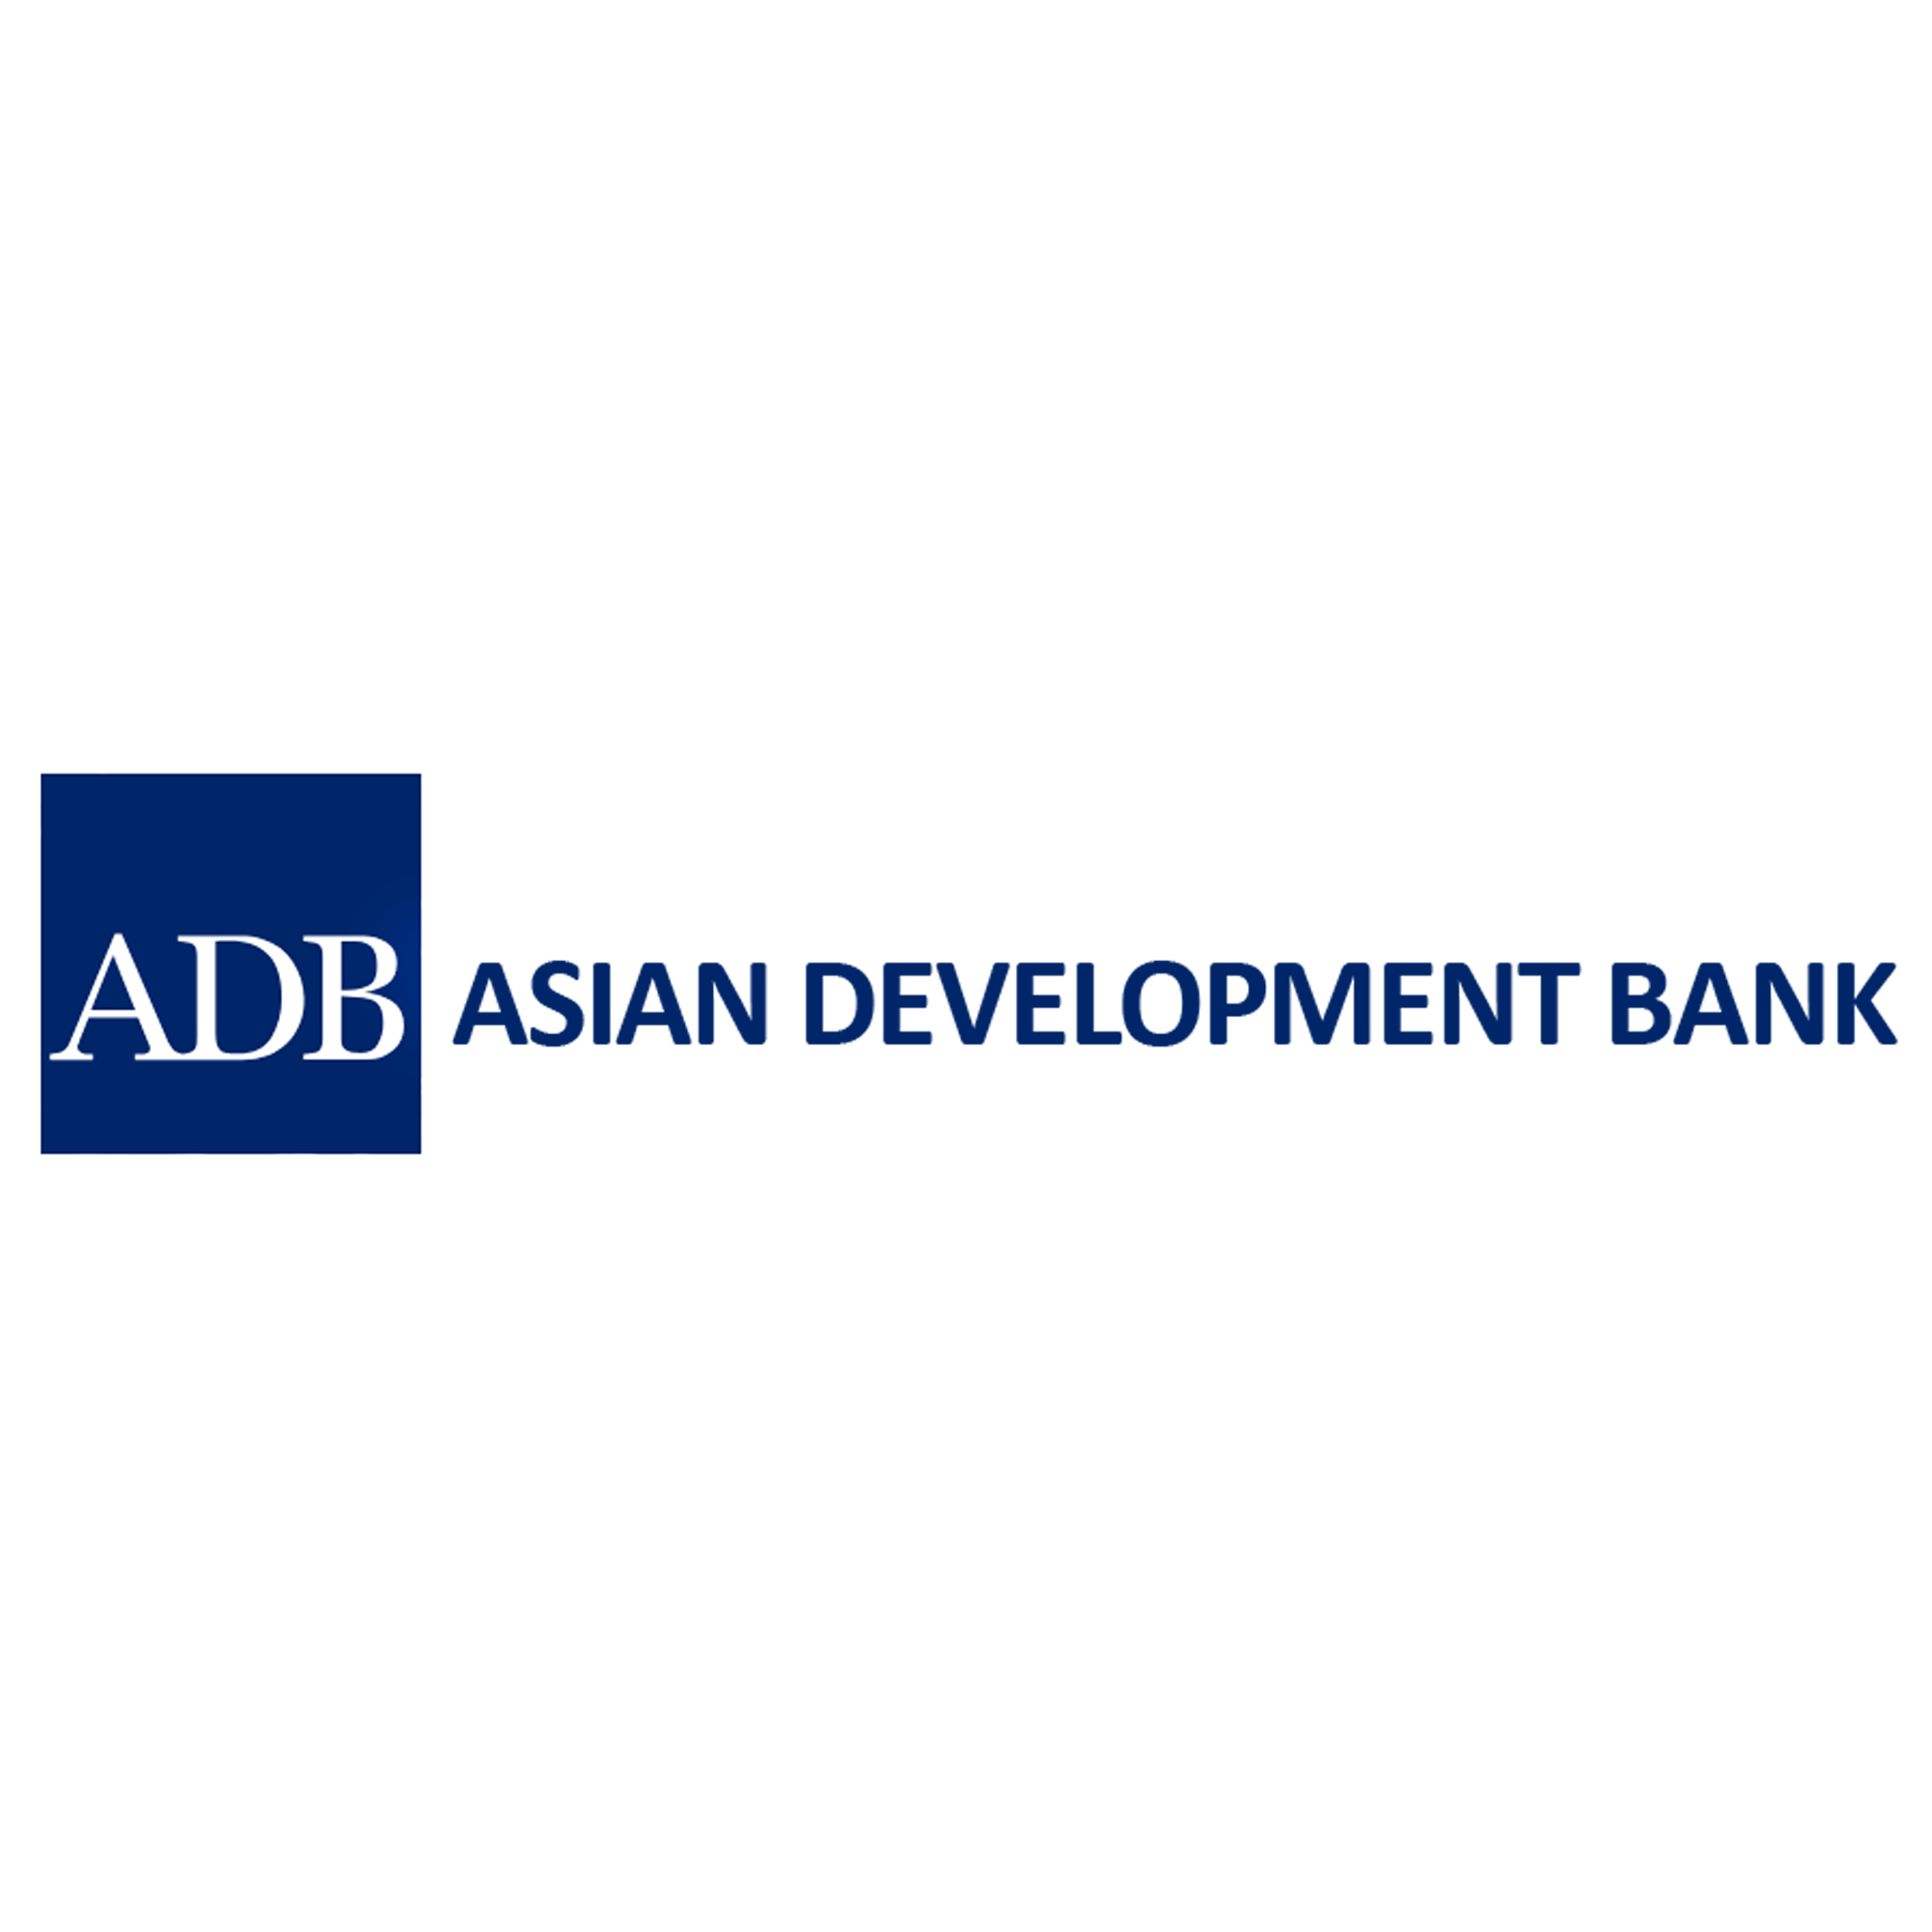 ADB (Asian Development Bank)